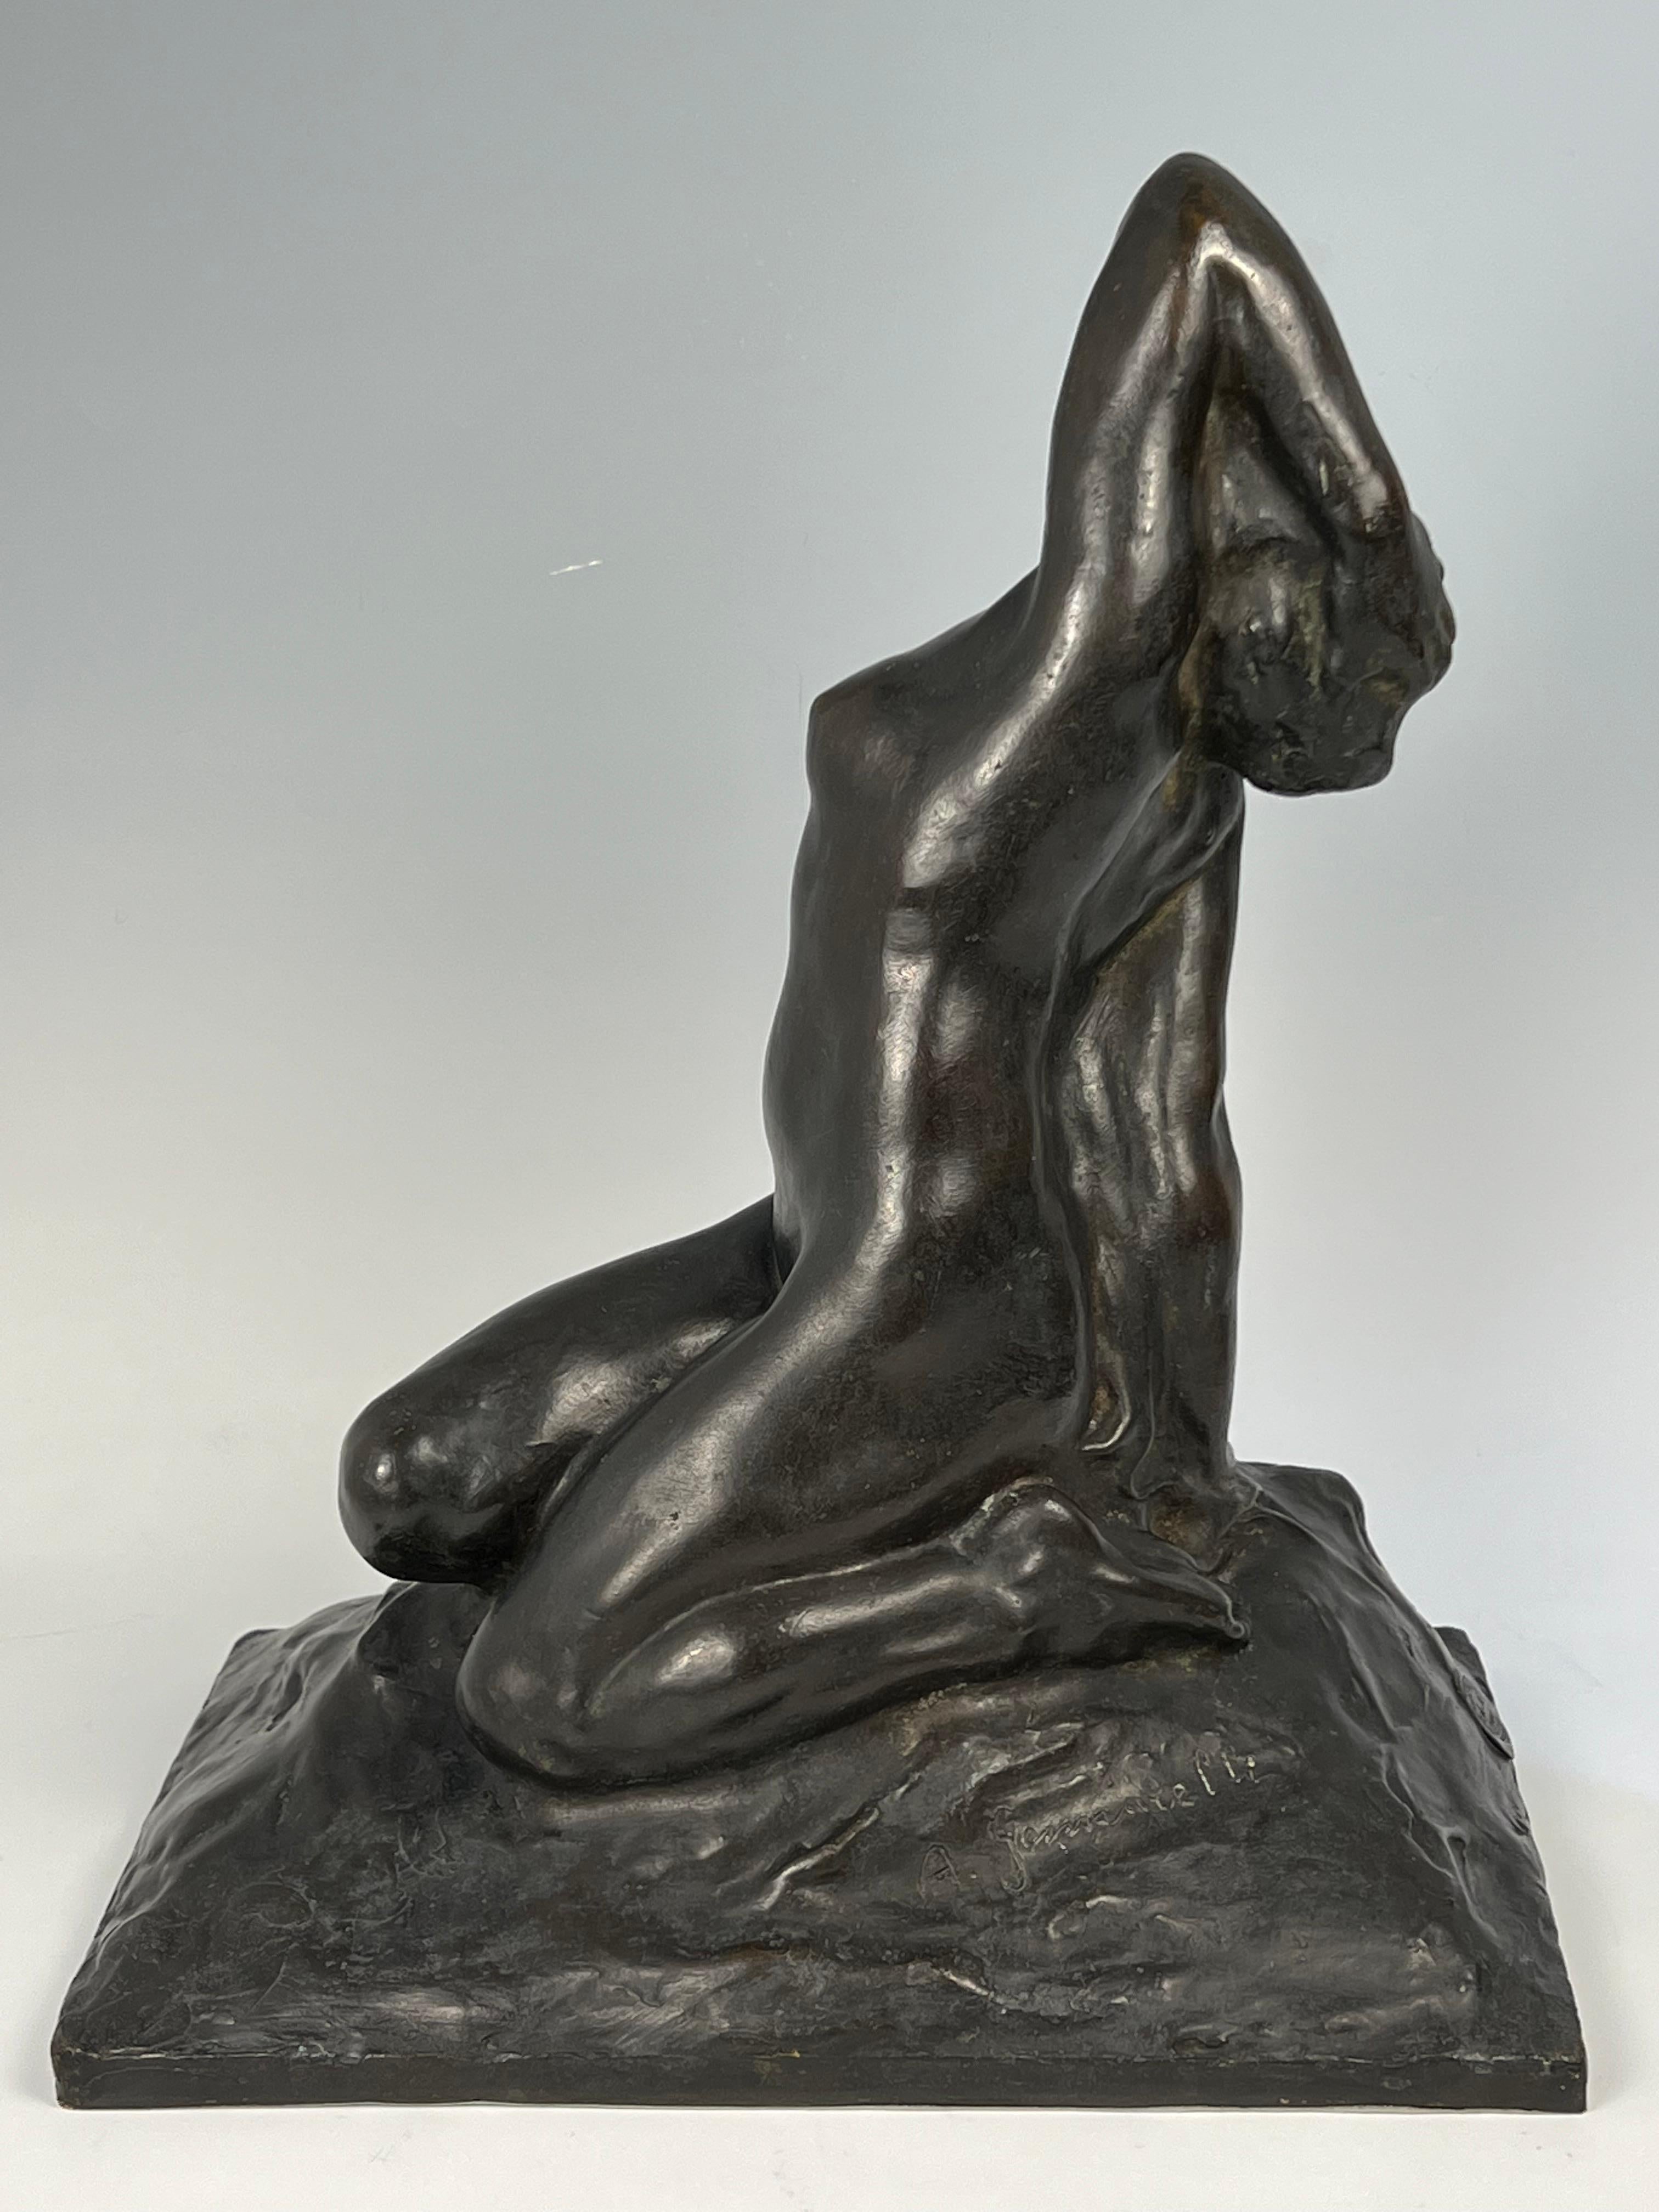 1752 sculpture